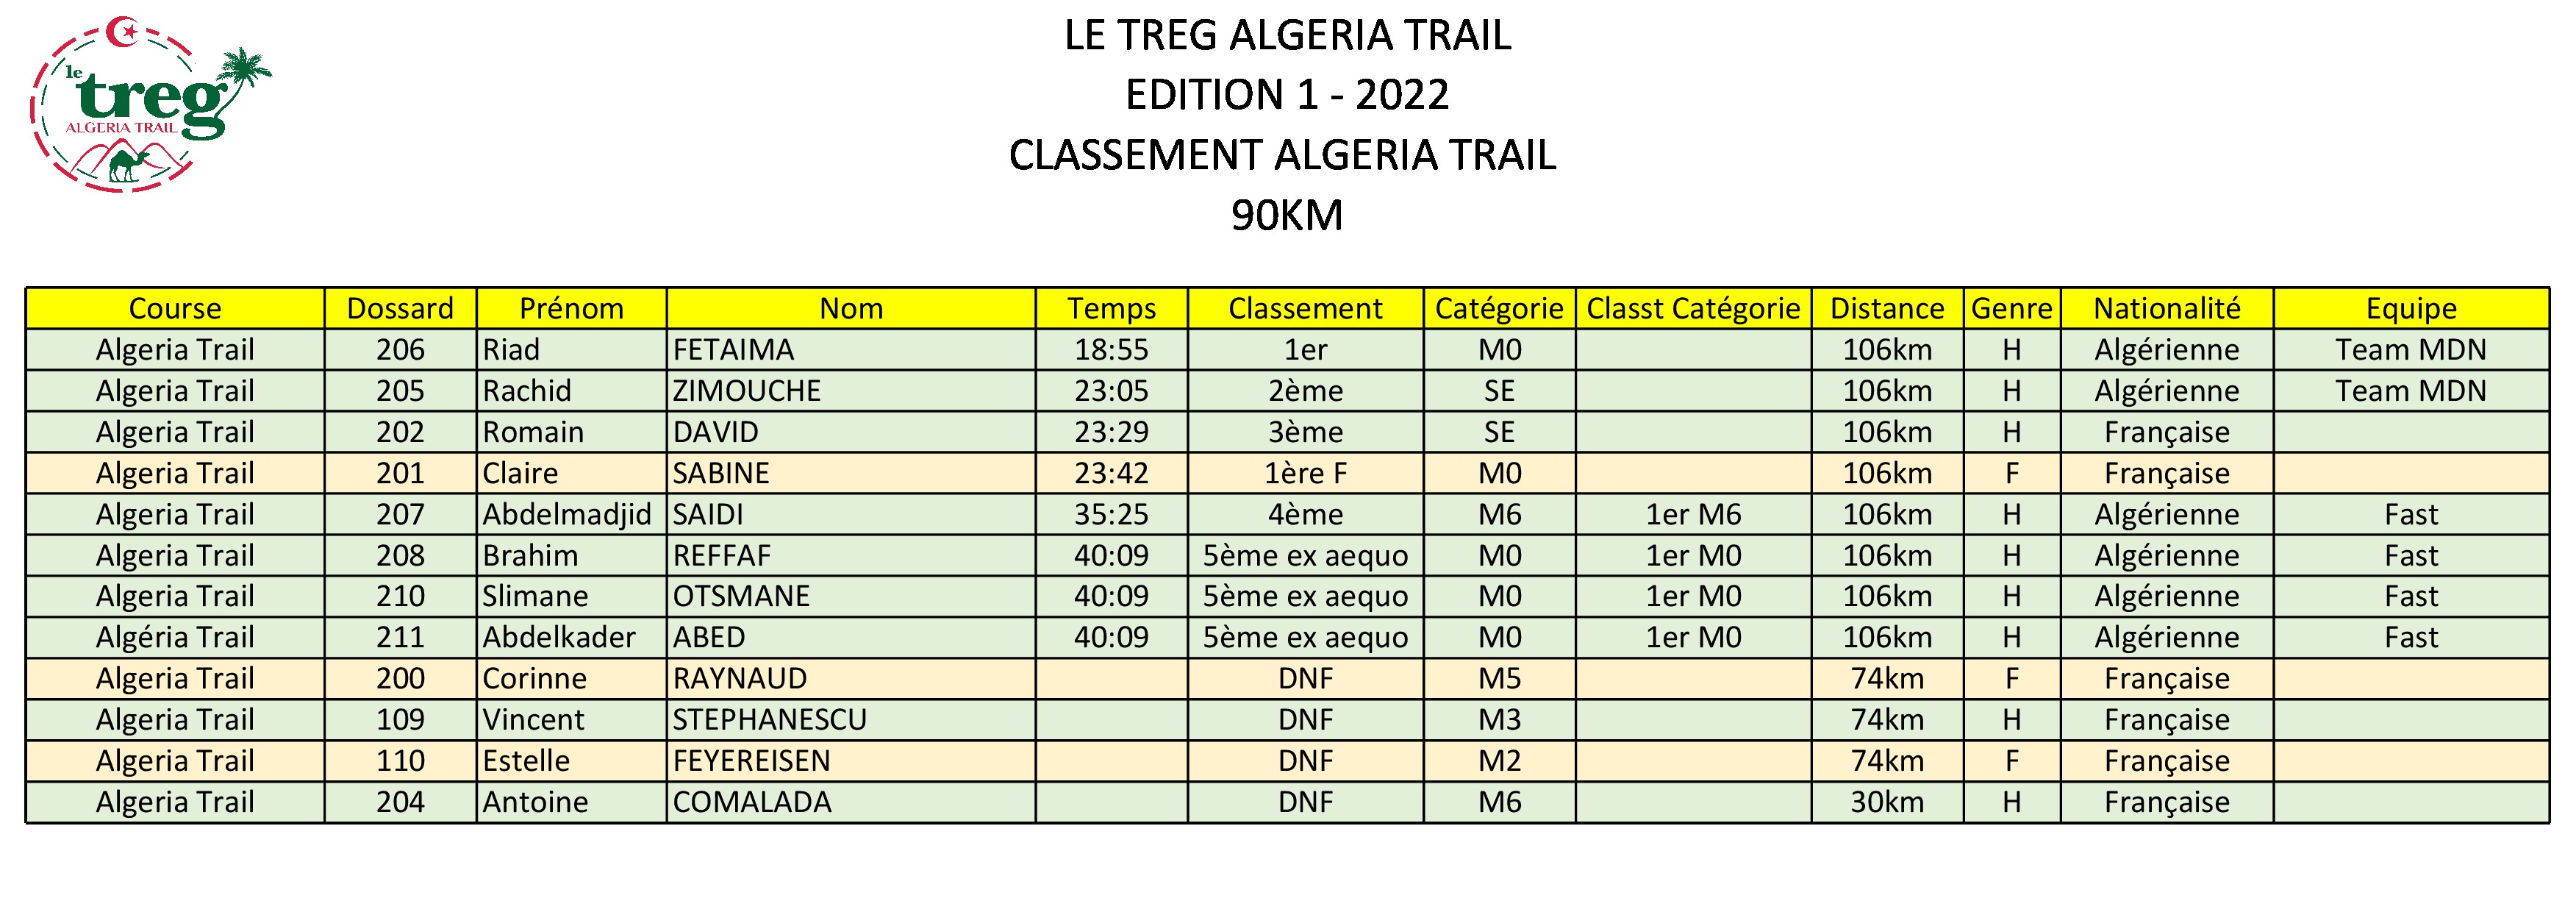 Classement Algéria Trail 90km 2022.jpg